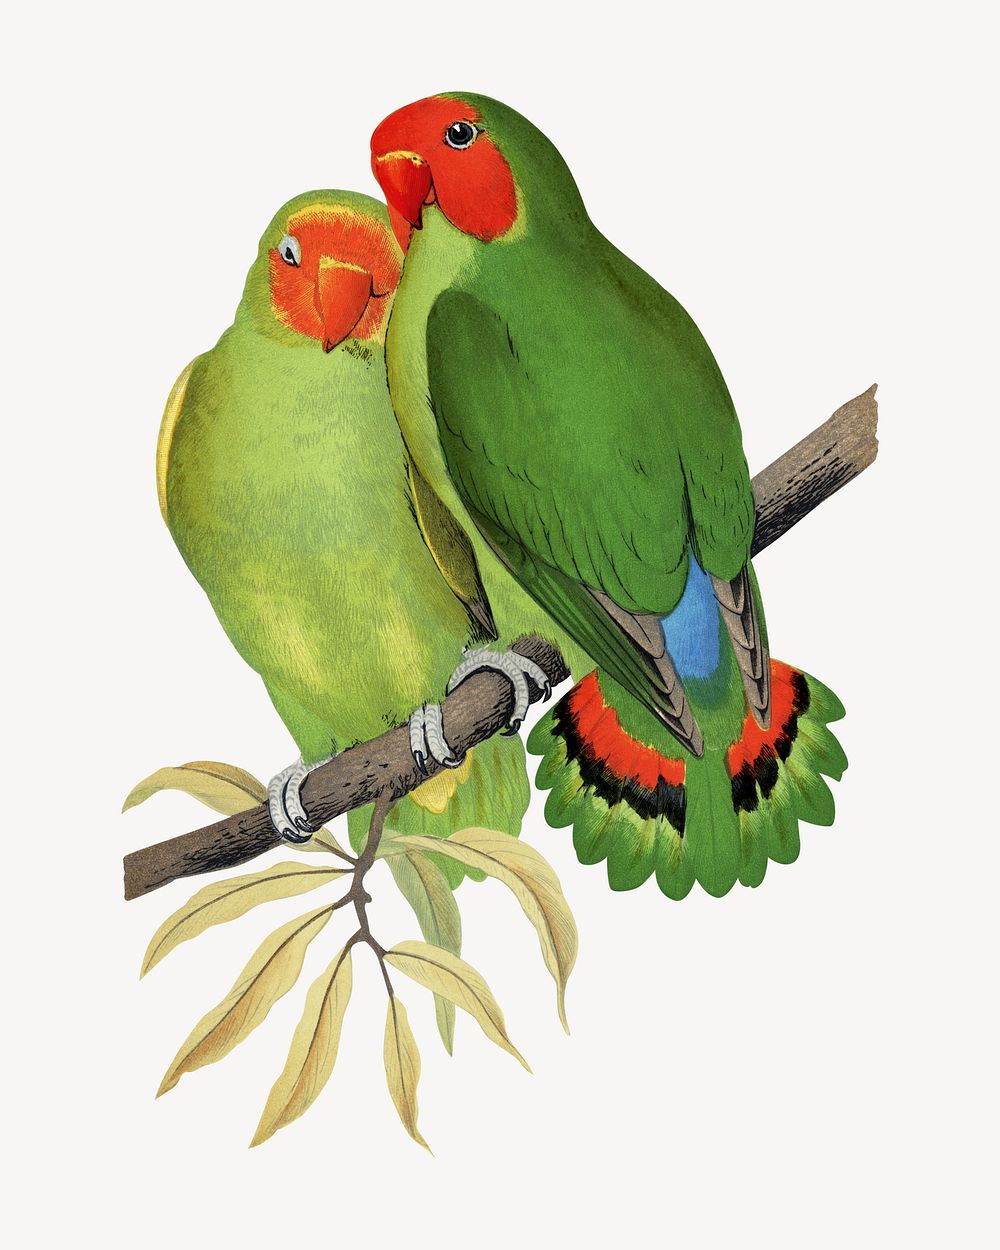 West African love-bird vintage bird illustration. Remixed by rawpixel.